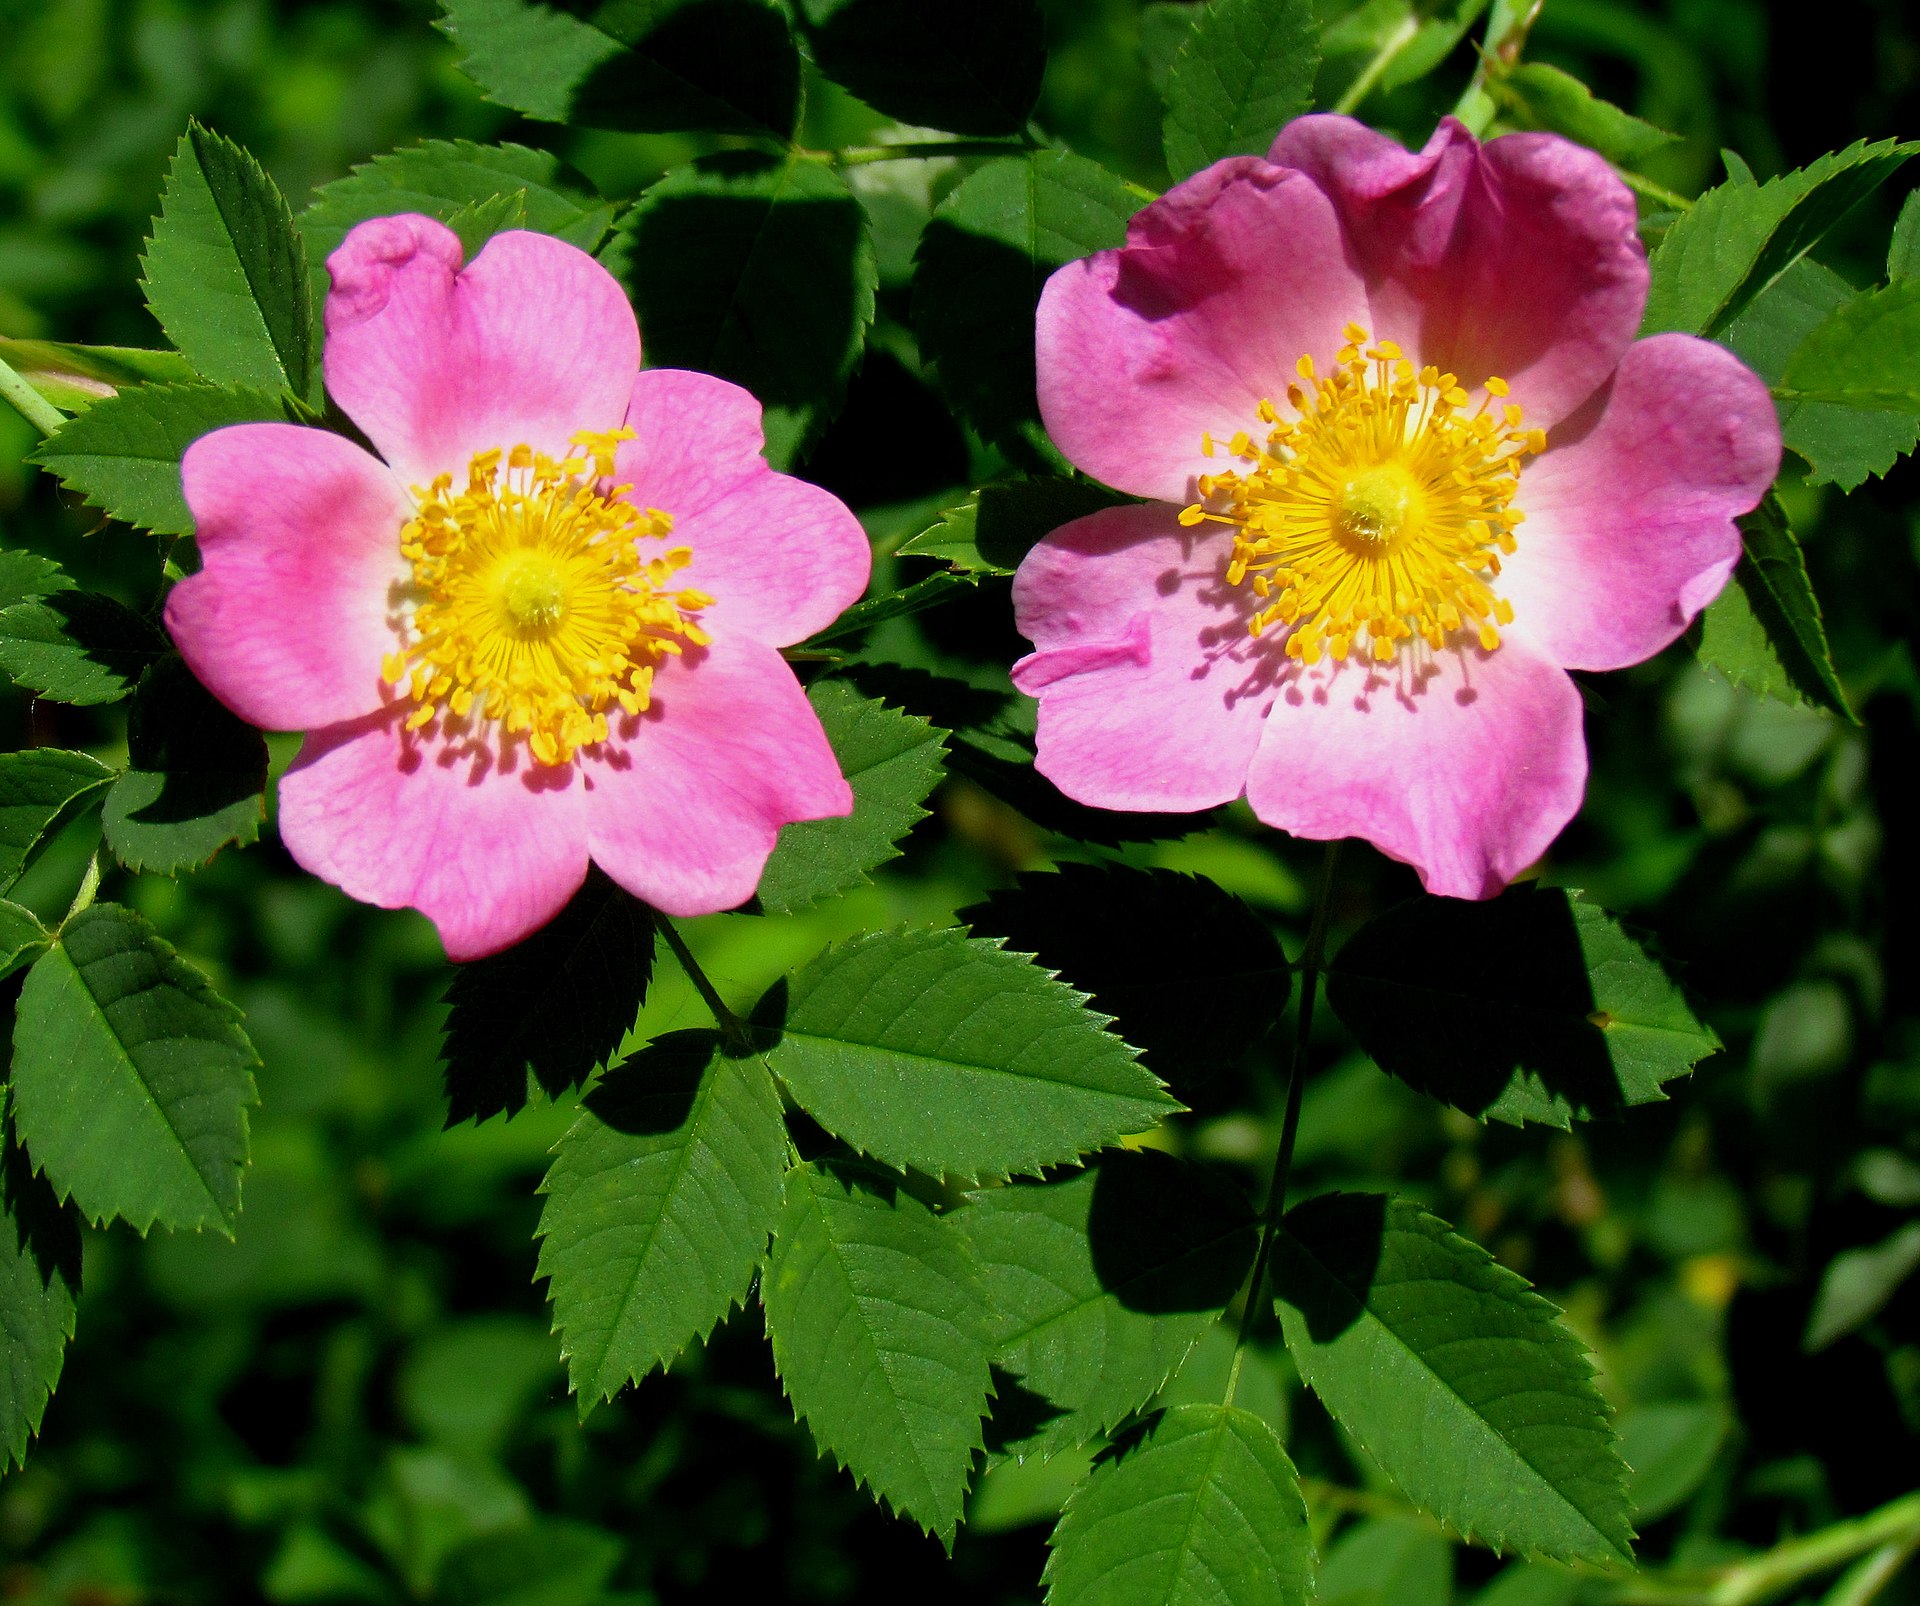 Rosa carolina, hay hoa hồng Carolina, hoa hồng đồng cỏ, là một loài thực vật có hoa nằm trong họ Hoa hồng (Rosaceae)